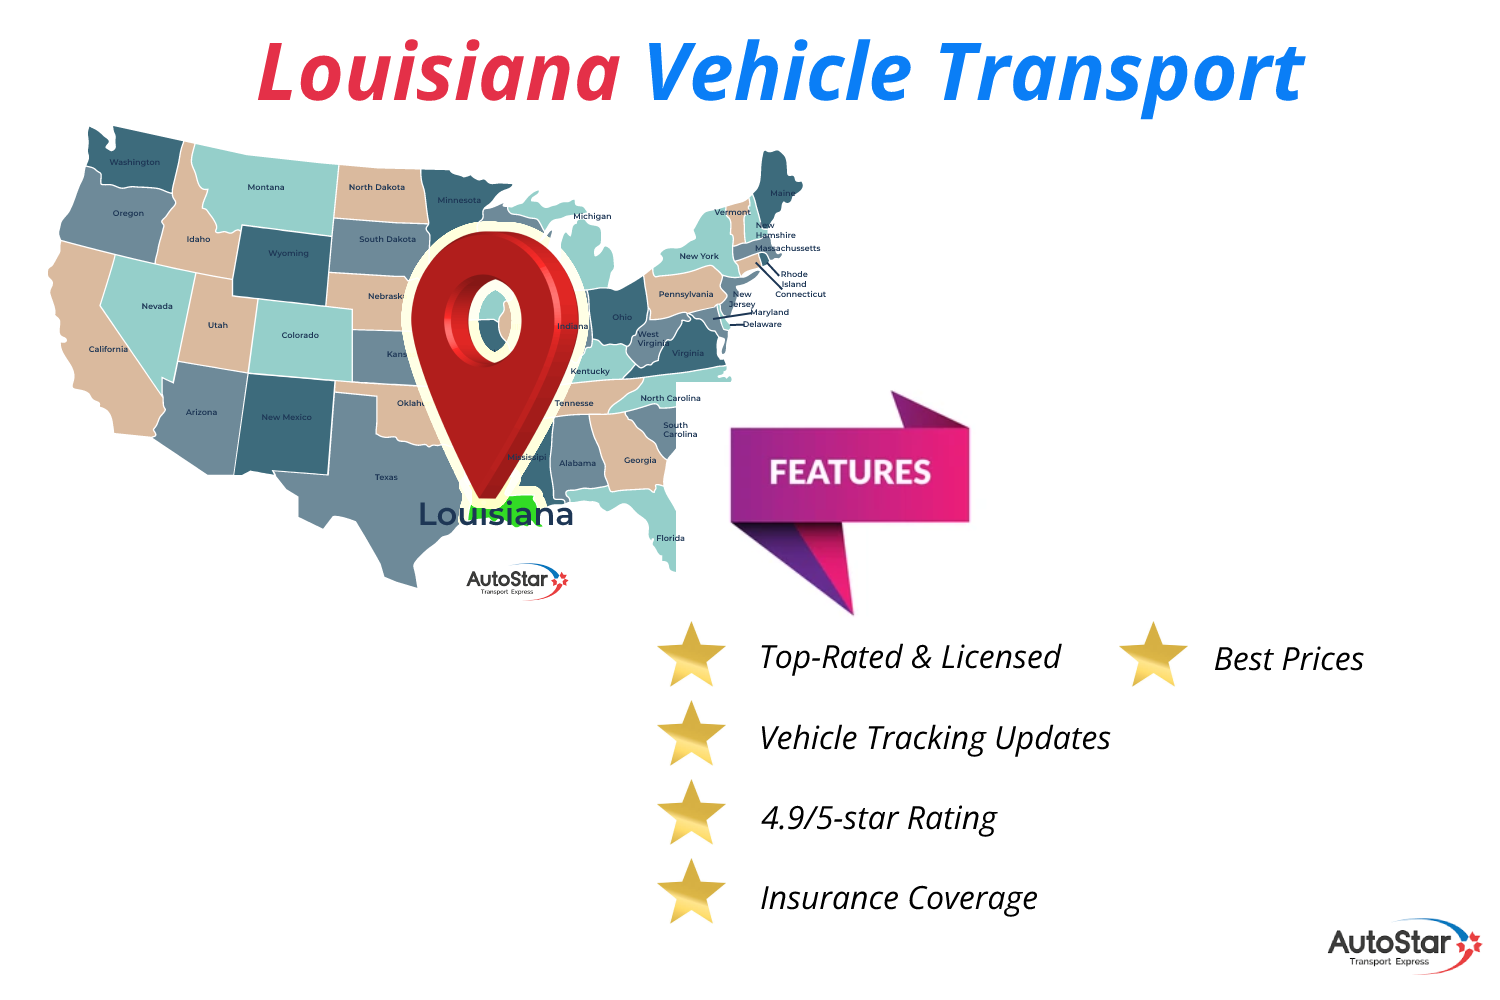 Louisiana Vehicle Transport